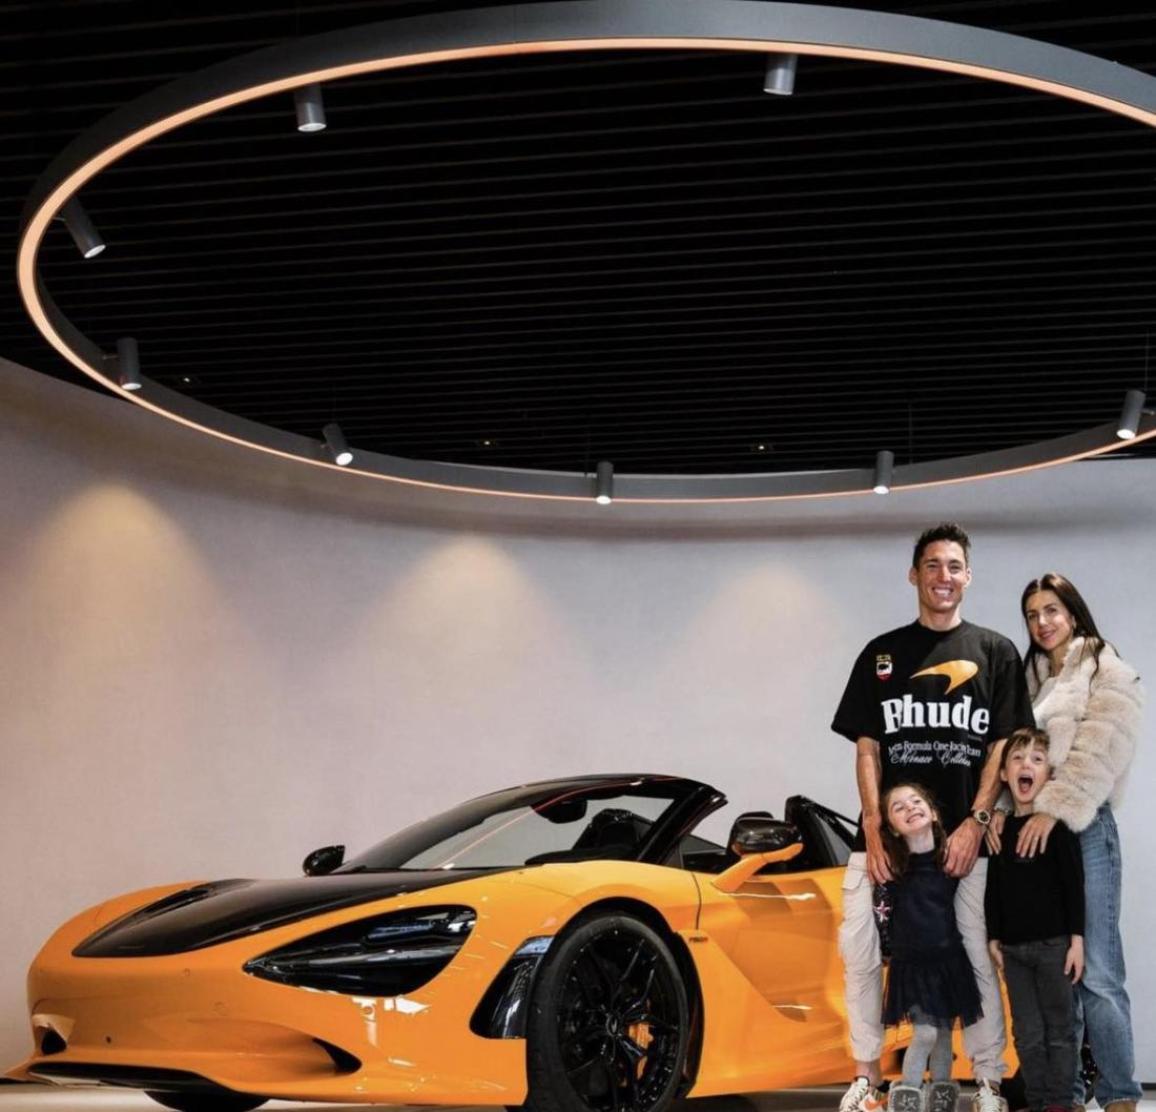 To γκαράζ του Aleix Espargaro φιλοξενεί πλέον και μία McLaren